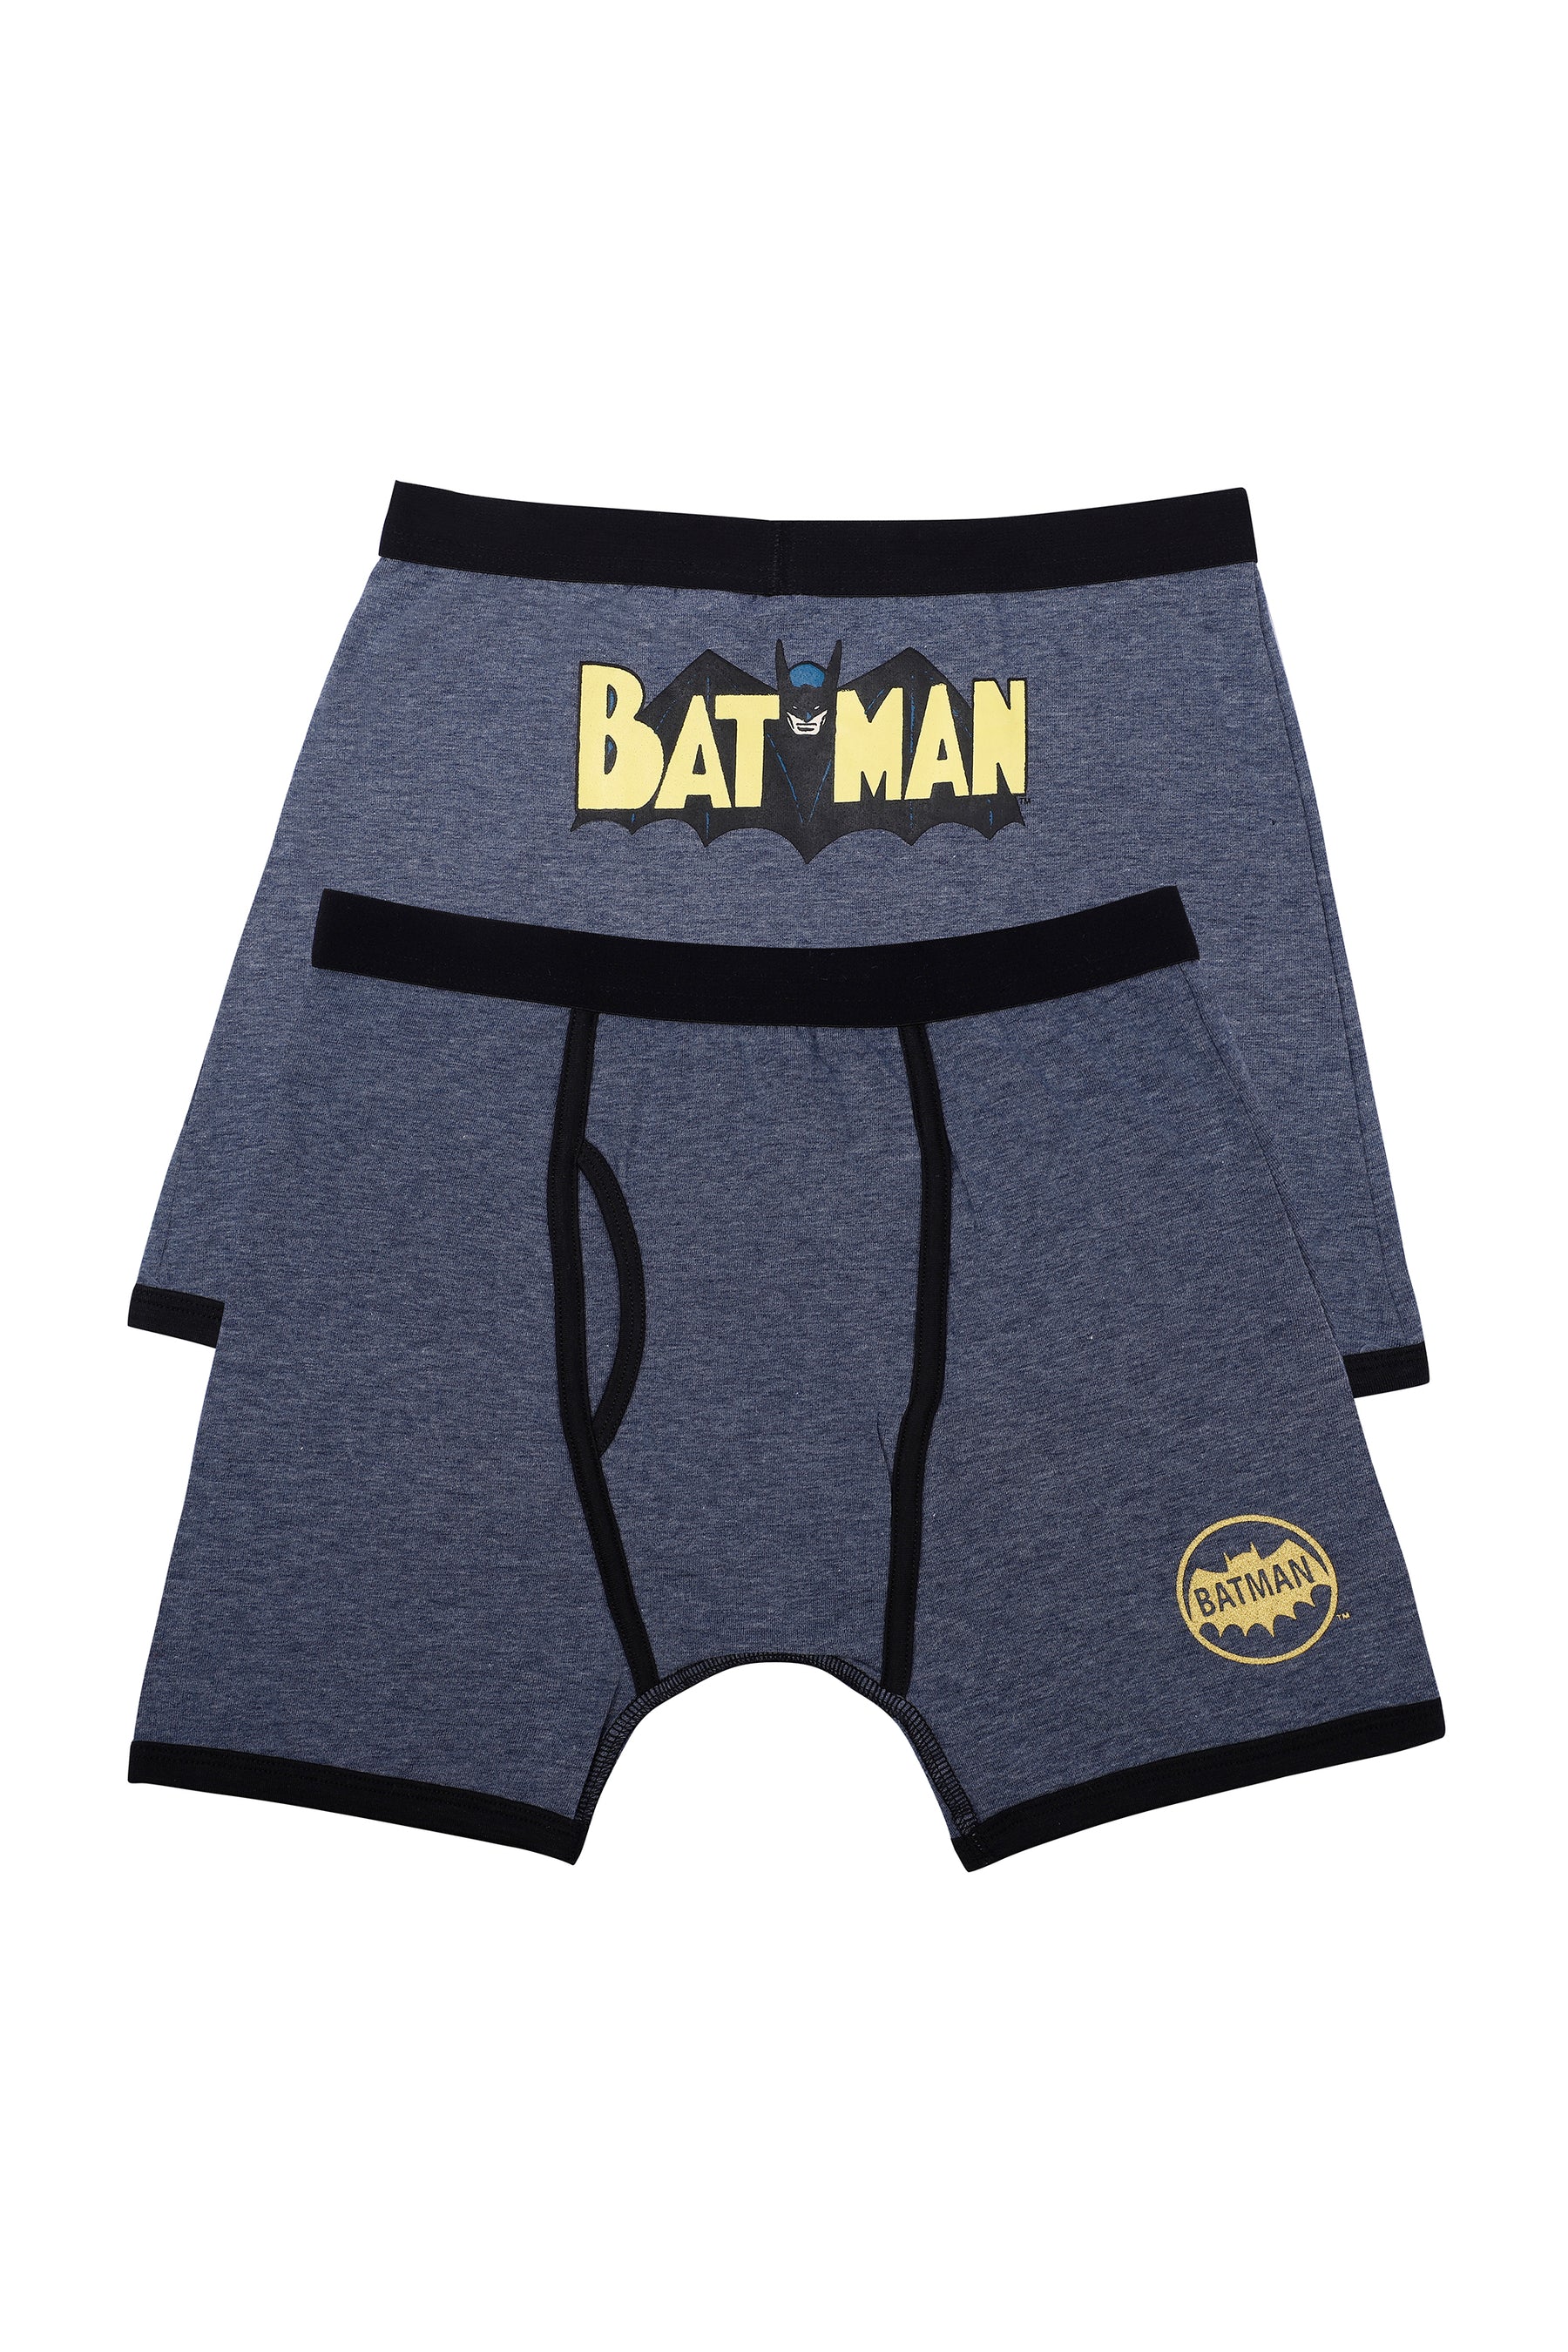 DC Comics Boys Batman Superhero Justice League Boxer Brief